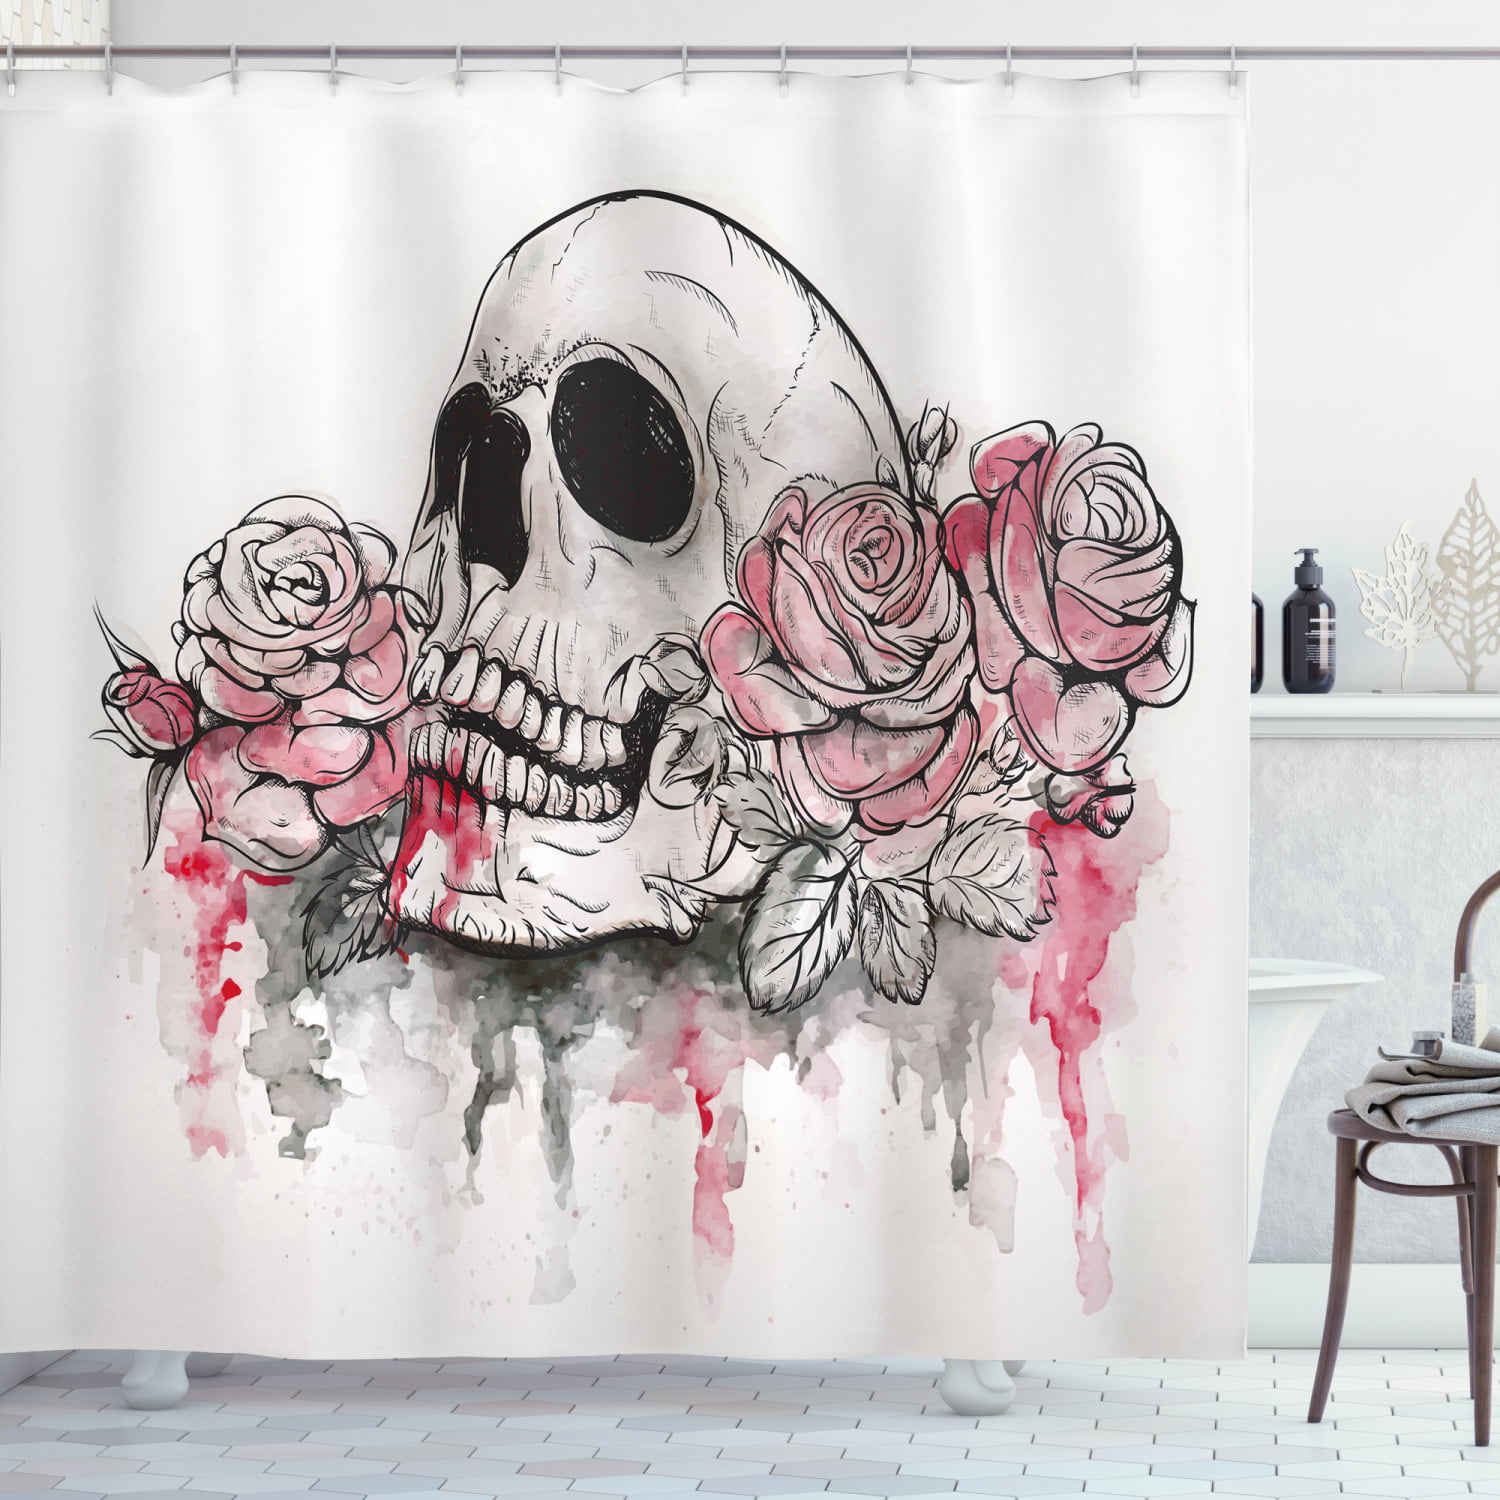 Decaying Burning Skull Shower Curtain Liner Waterproof Fabric Bathroom Set Hooks 